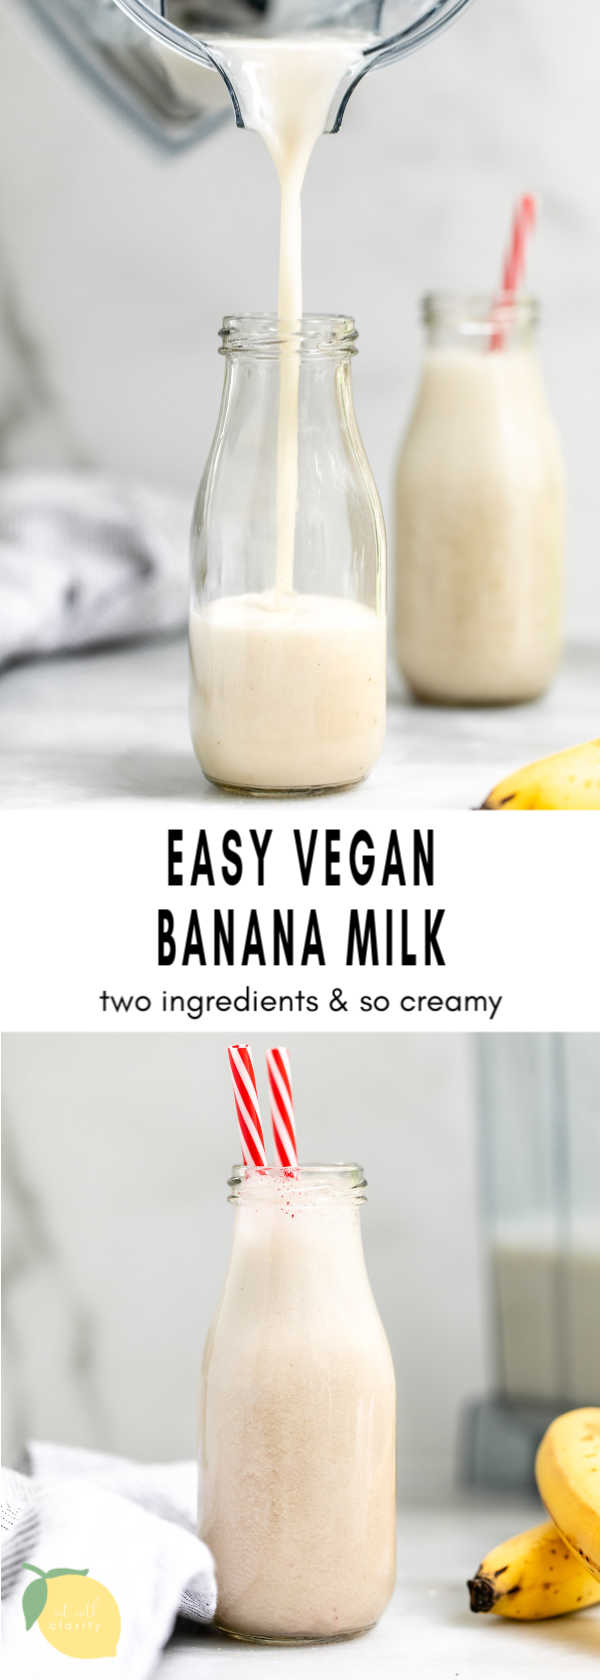 5 Minute Vegan Banana Milk | Eat With Clarity Drinks